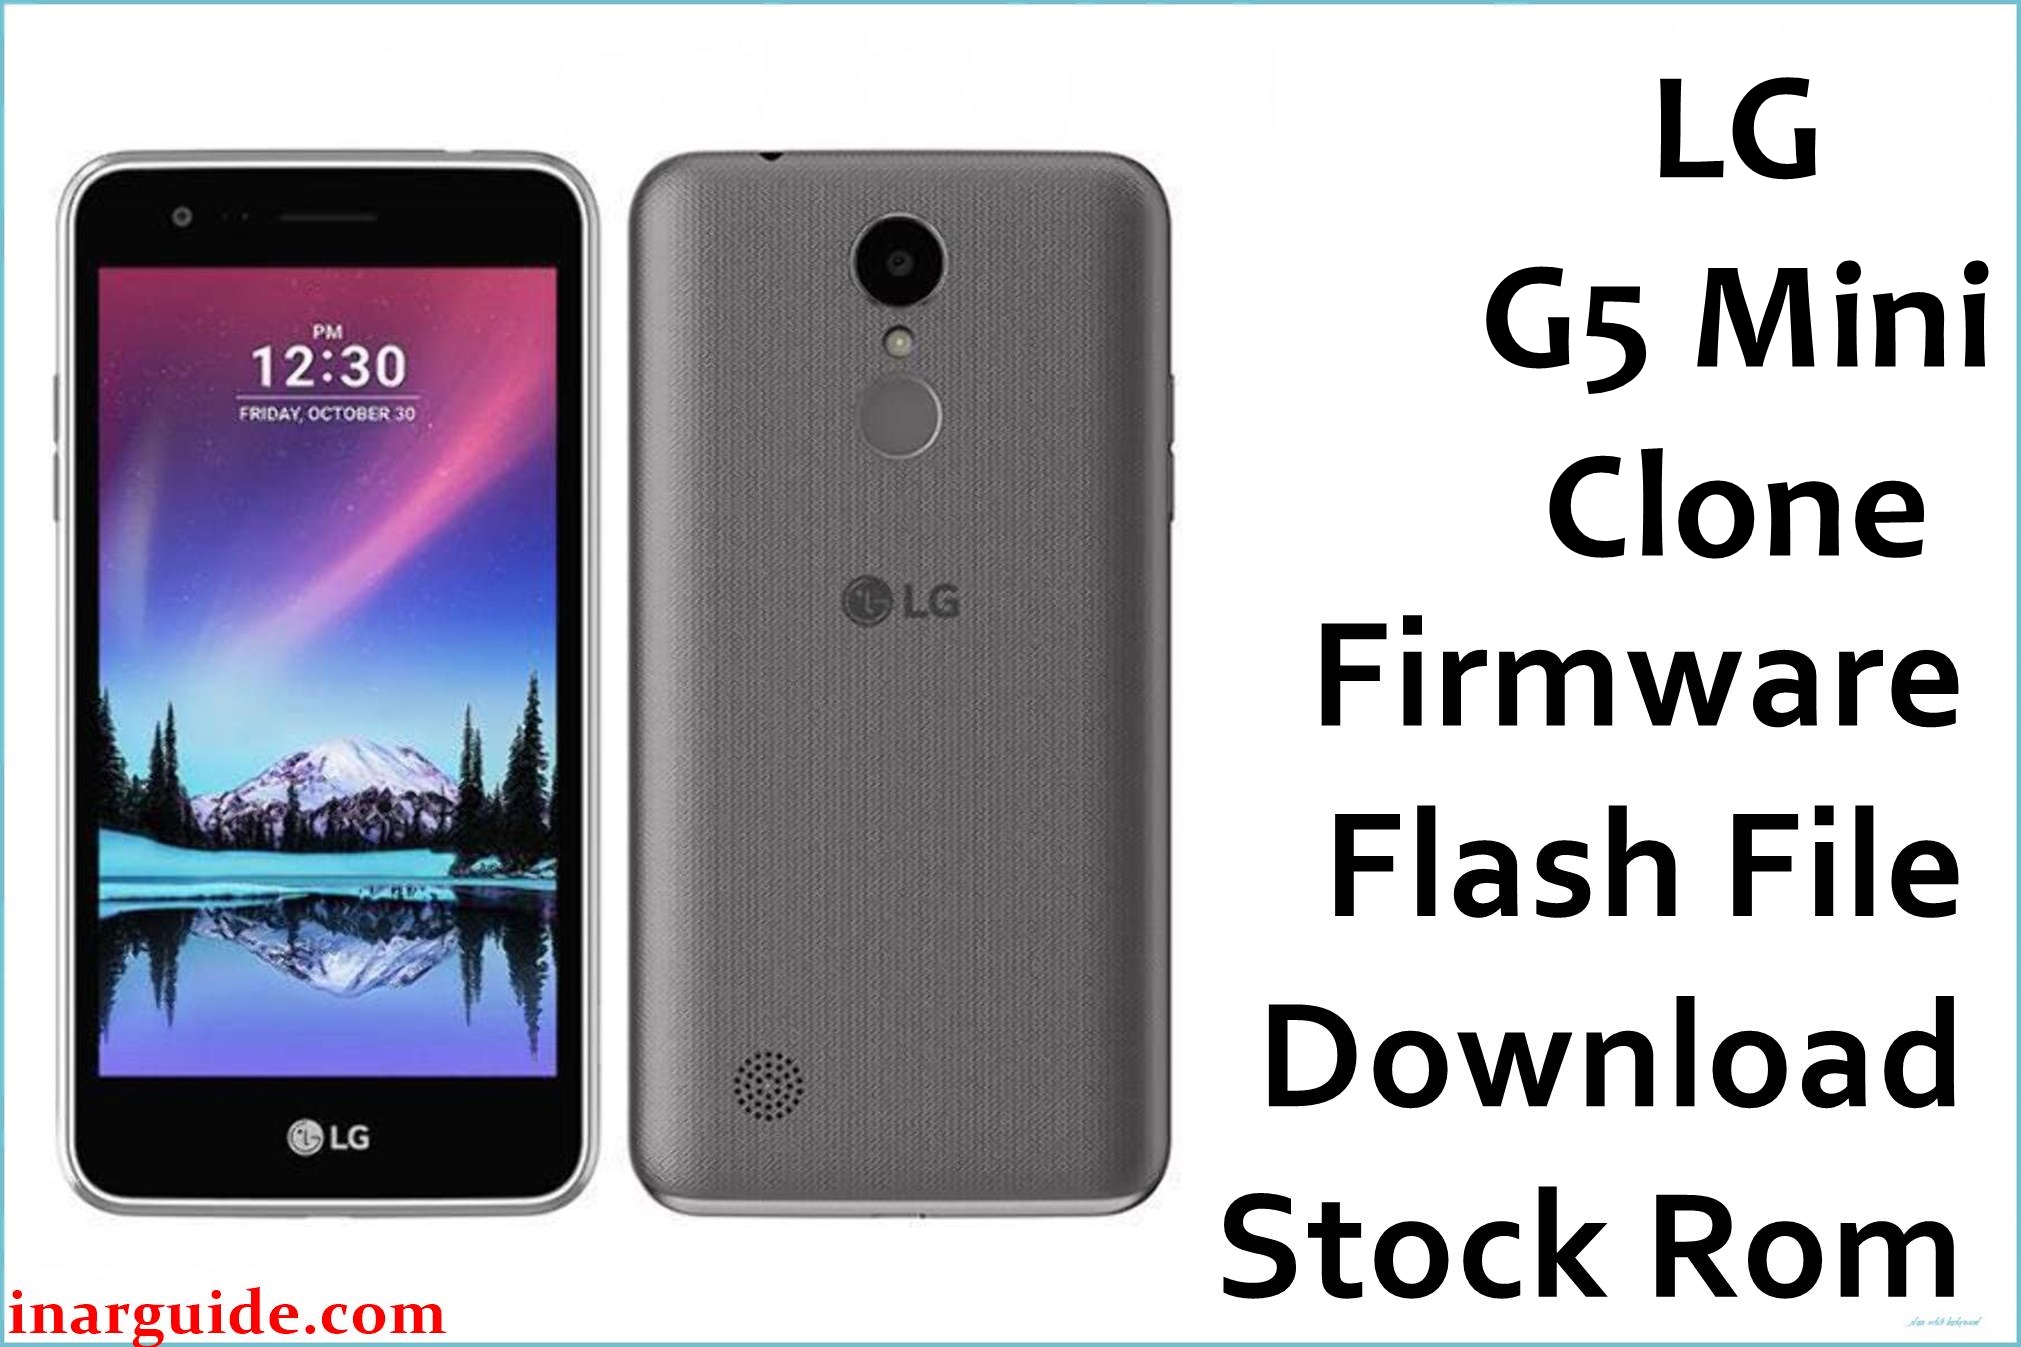 LG G5 Mini Clone